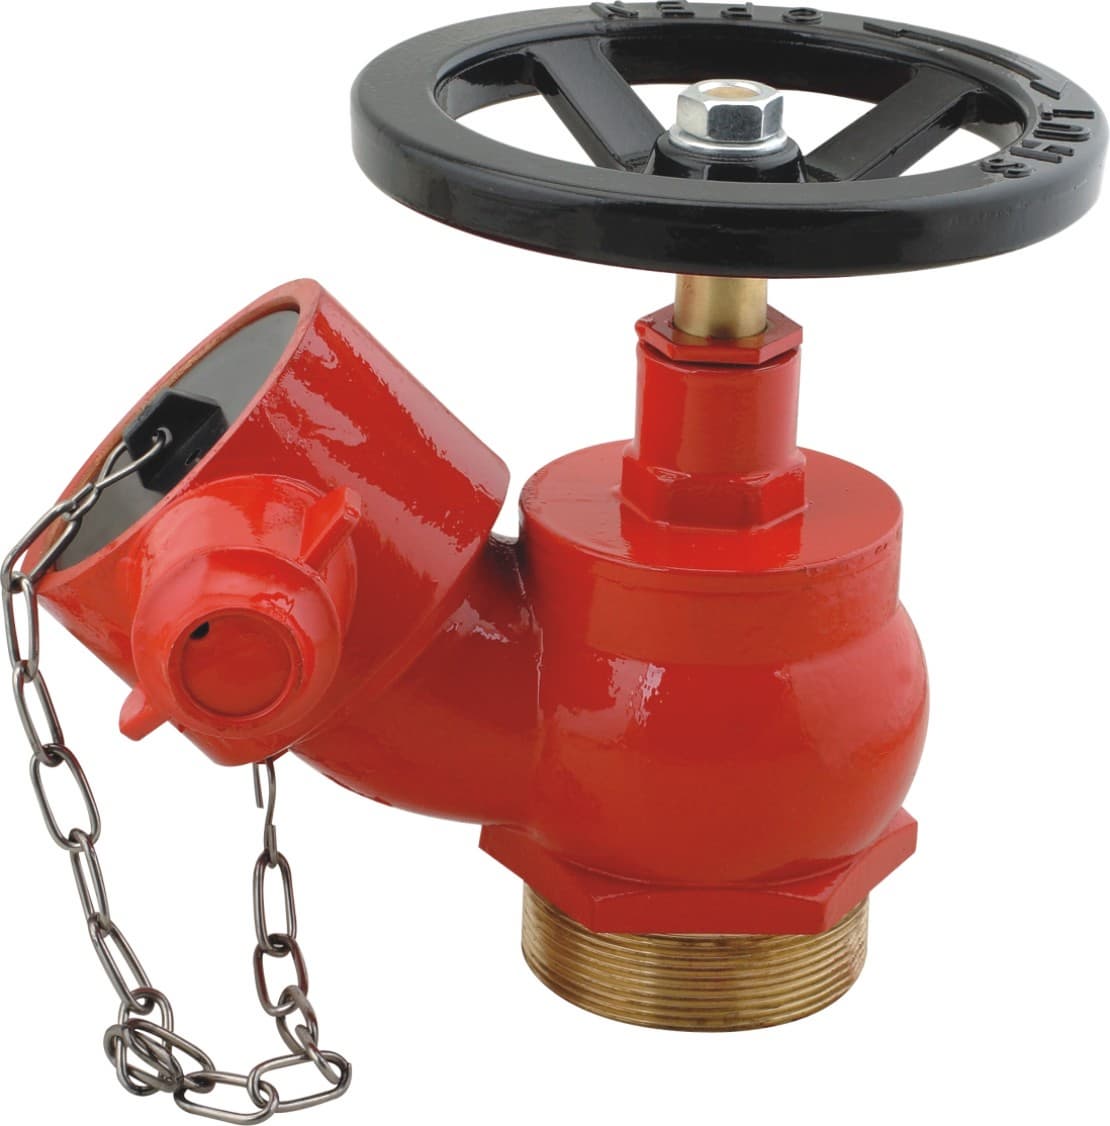 2_5 inch BS336 fire hydrant landing valve